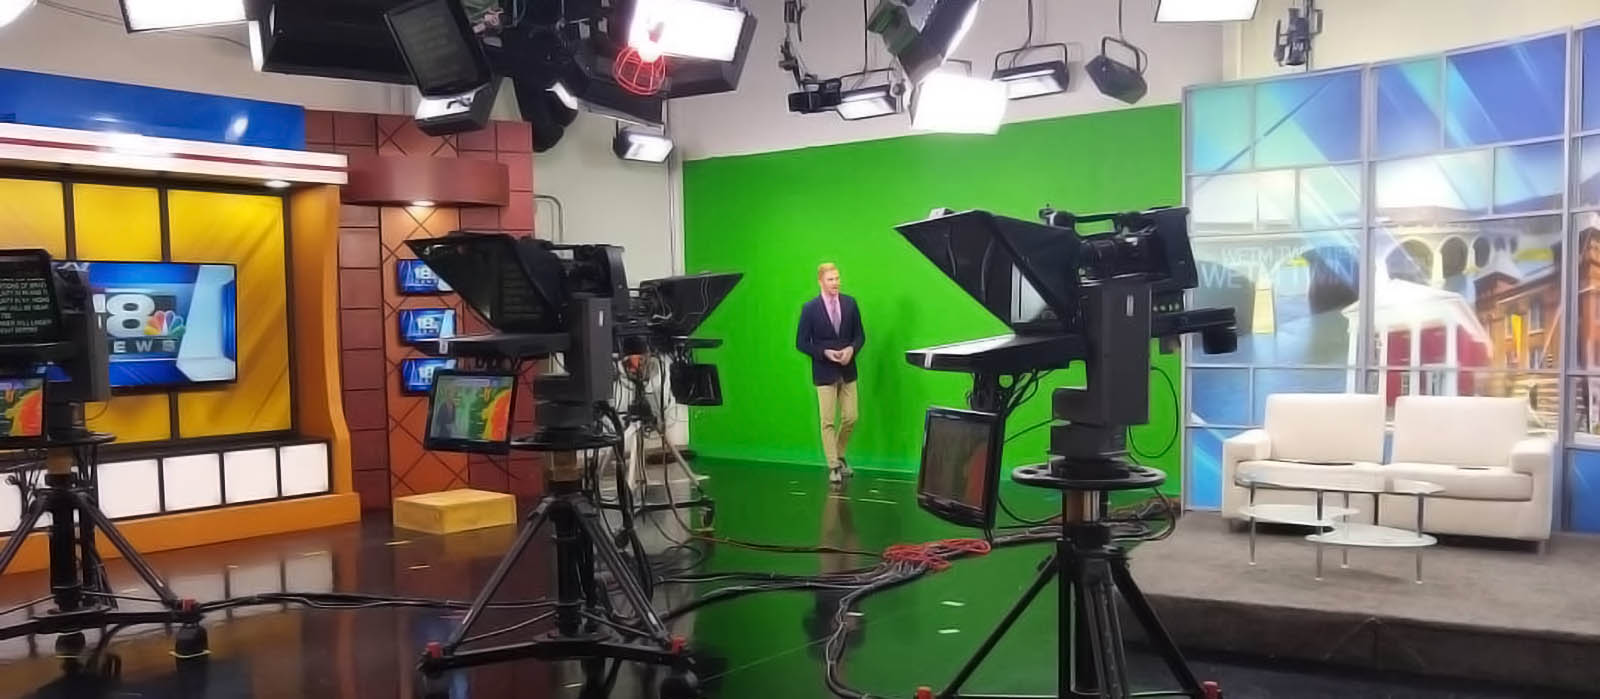 WETM News weather coverage studio